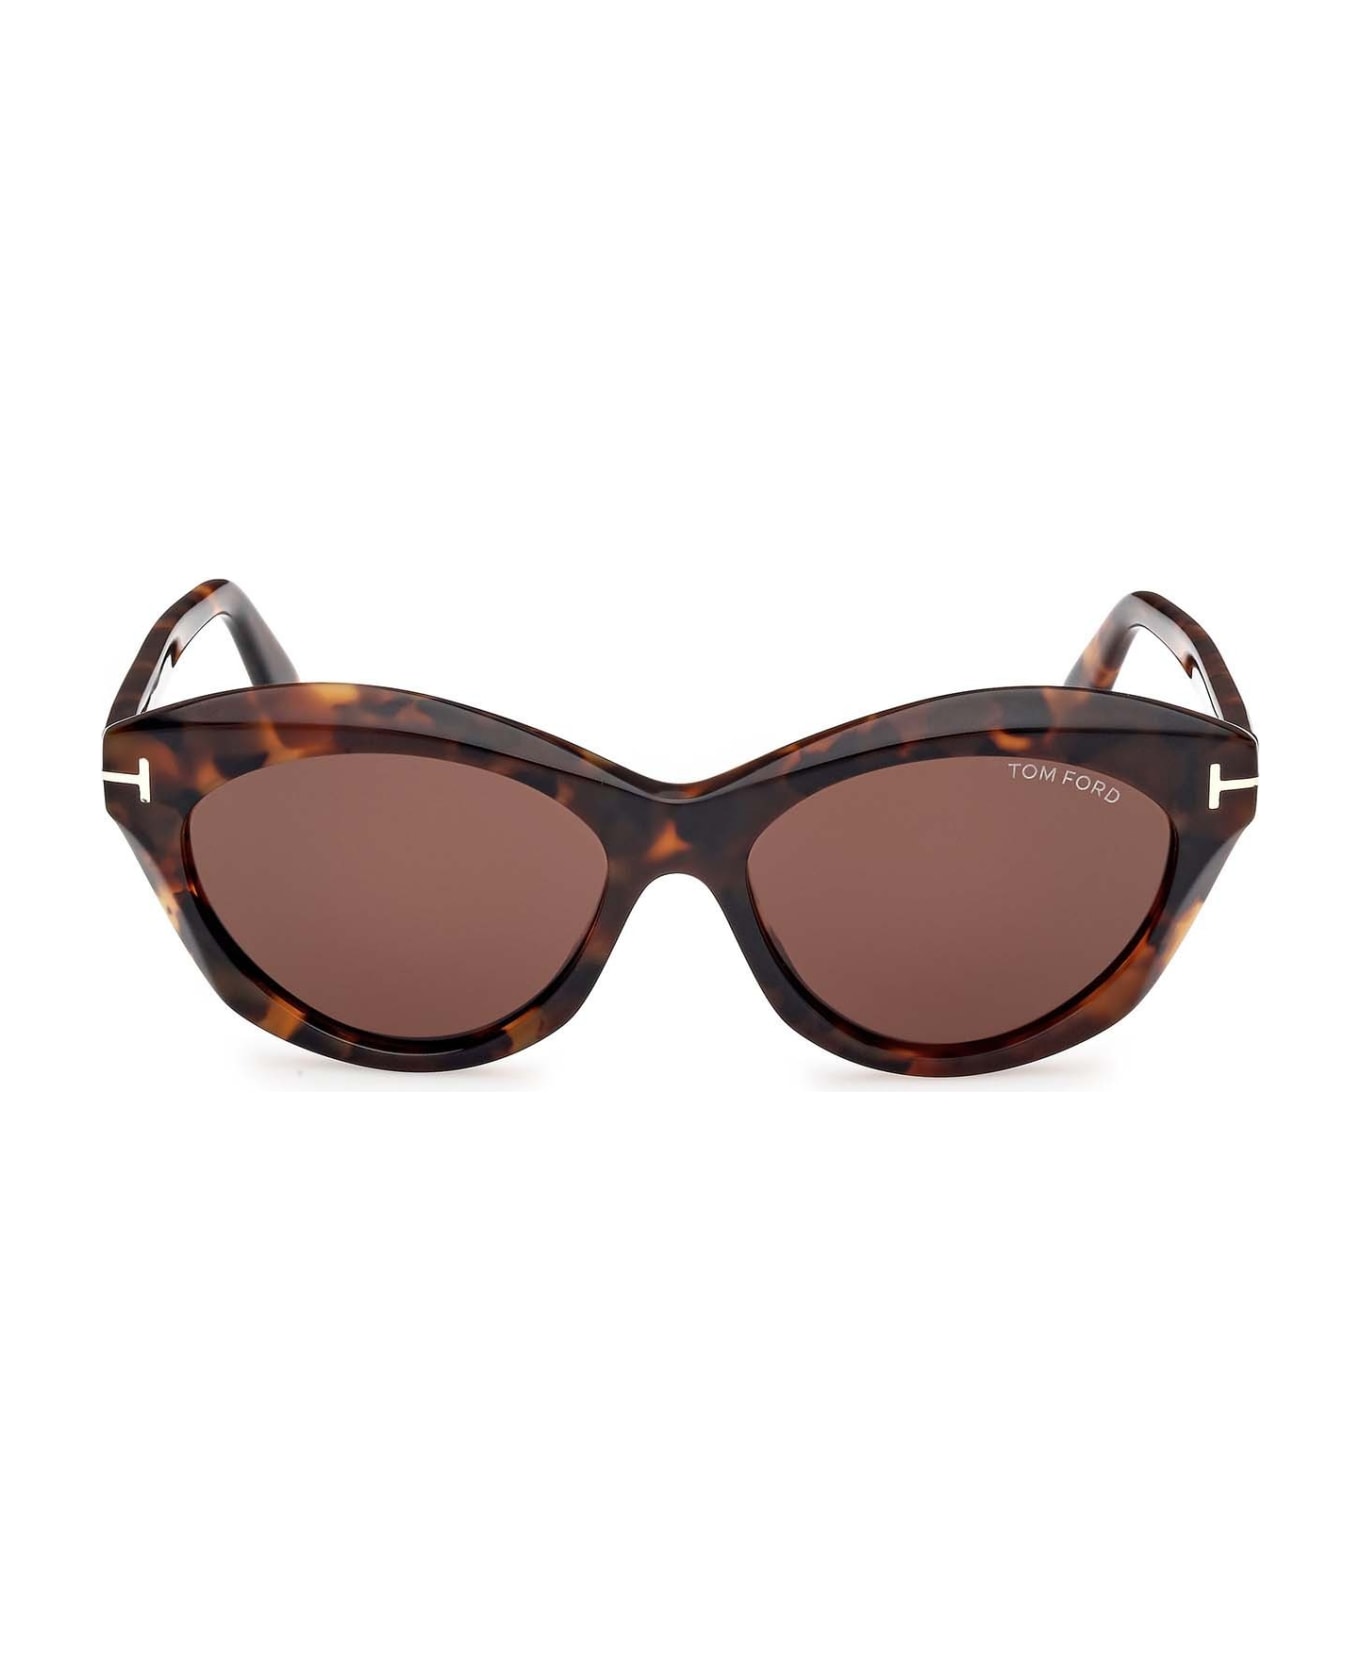 Tom Ford Eyewear Sunglasses - Havana/Marrone